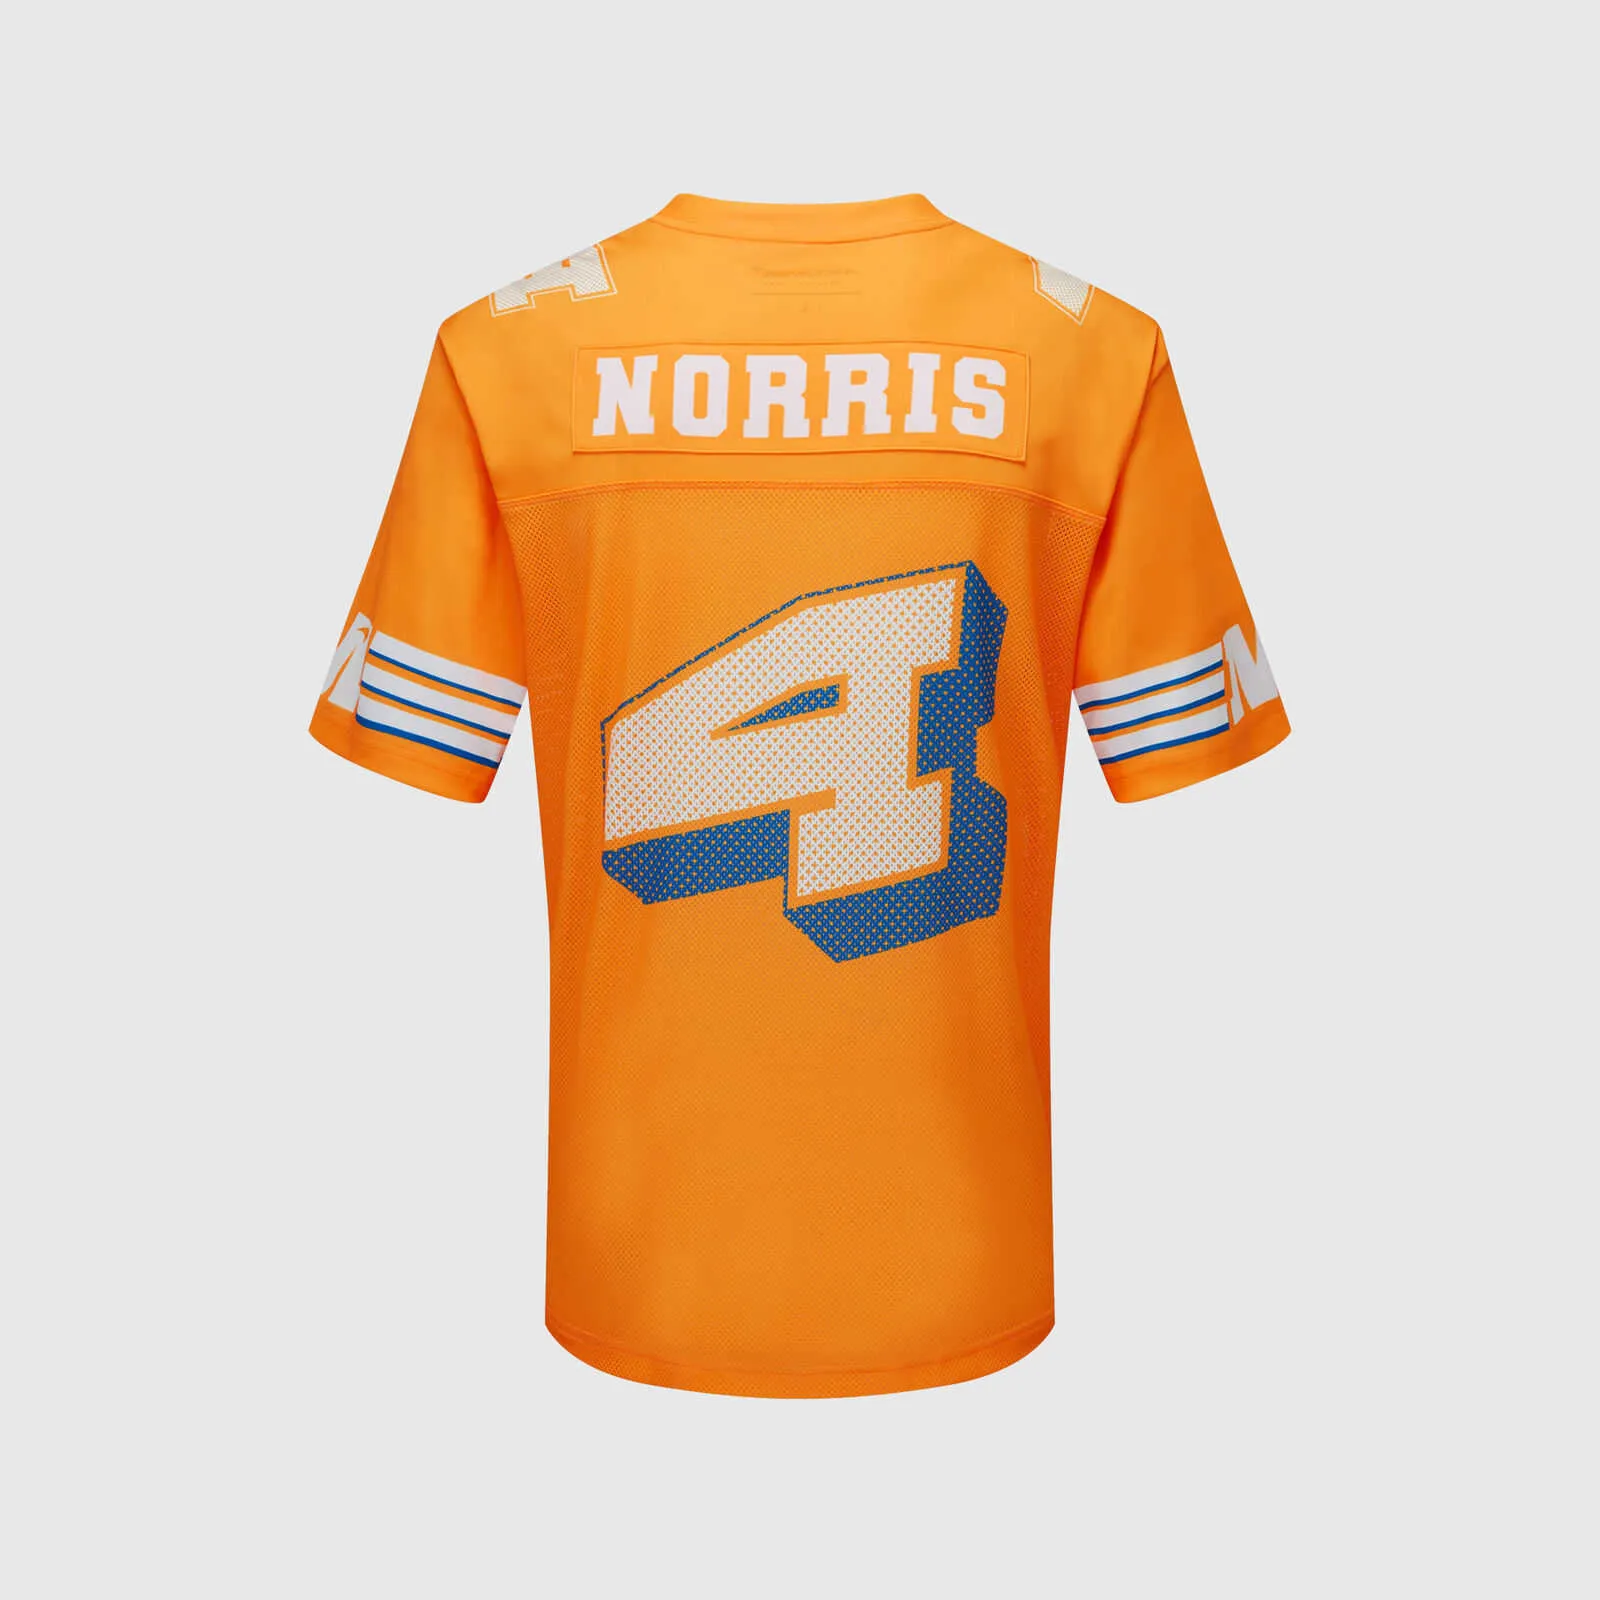 Sumt Shirt Lando Norris Jersey Mclaren F1 Official Website Team Moto Motocross Racing Suit Mens Clothing